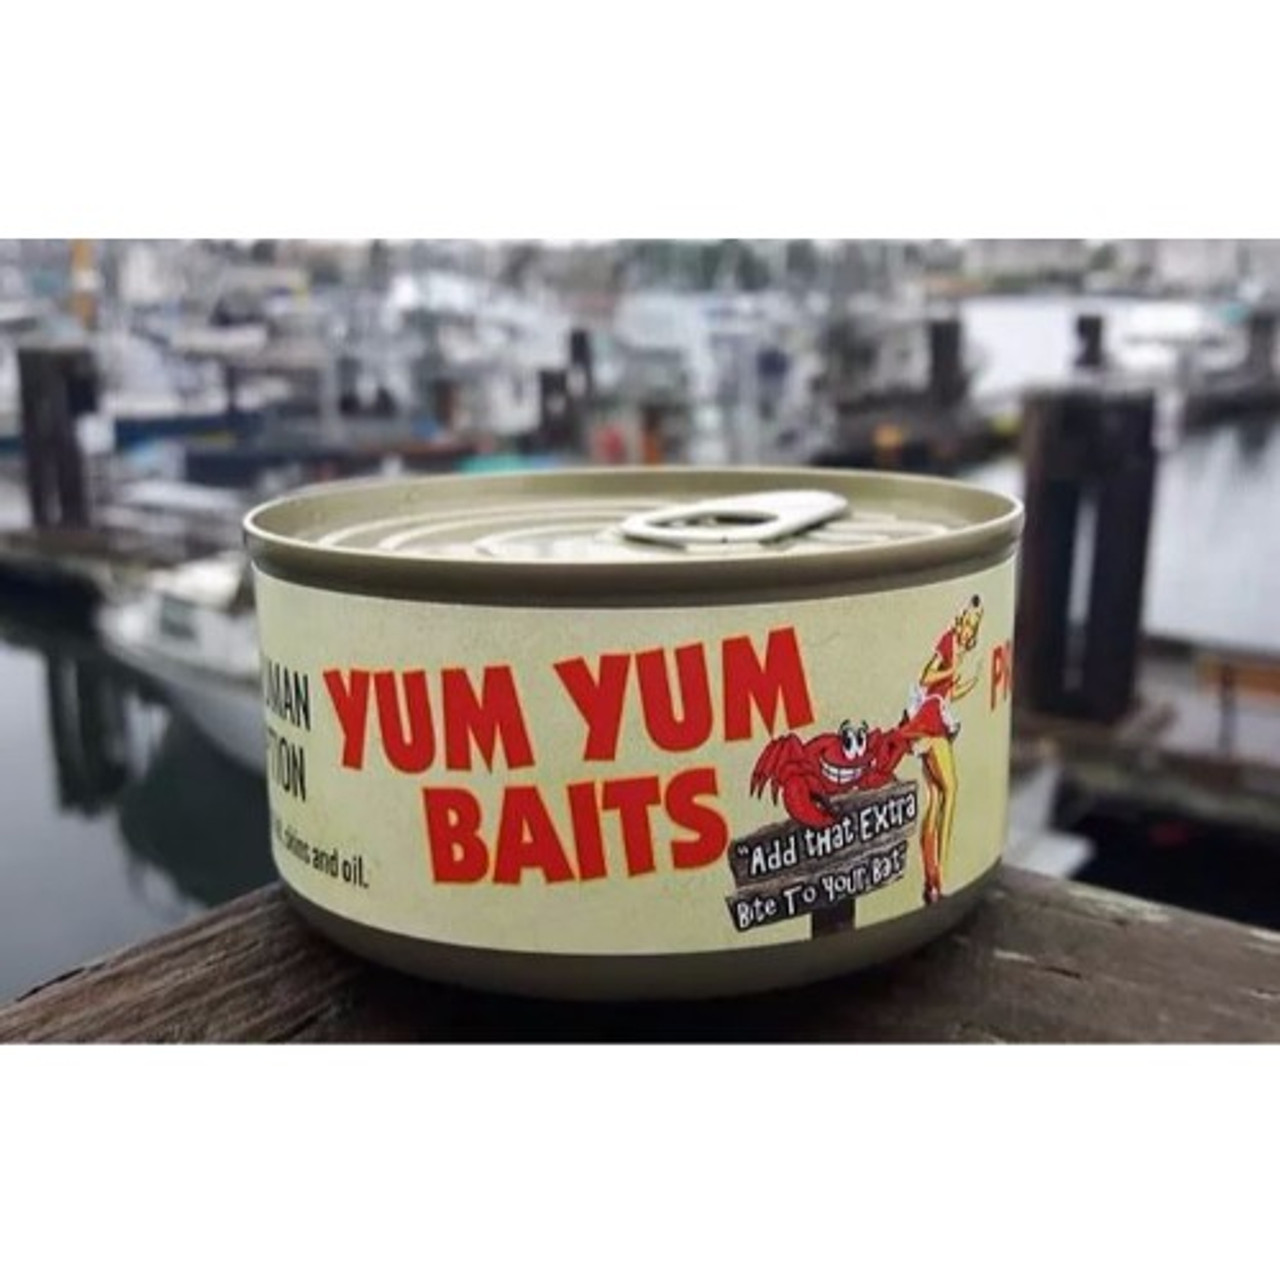 Yum Yum Baits Canned Prawn & Crab Bait - The Harbour Chandler